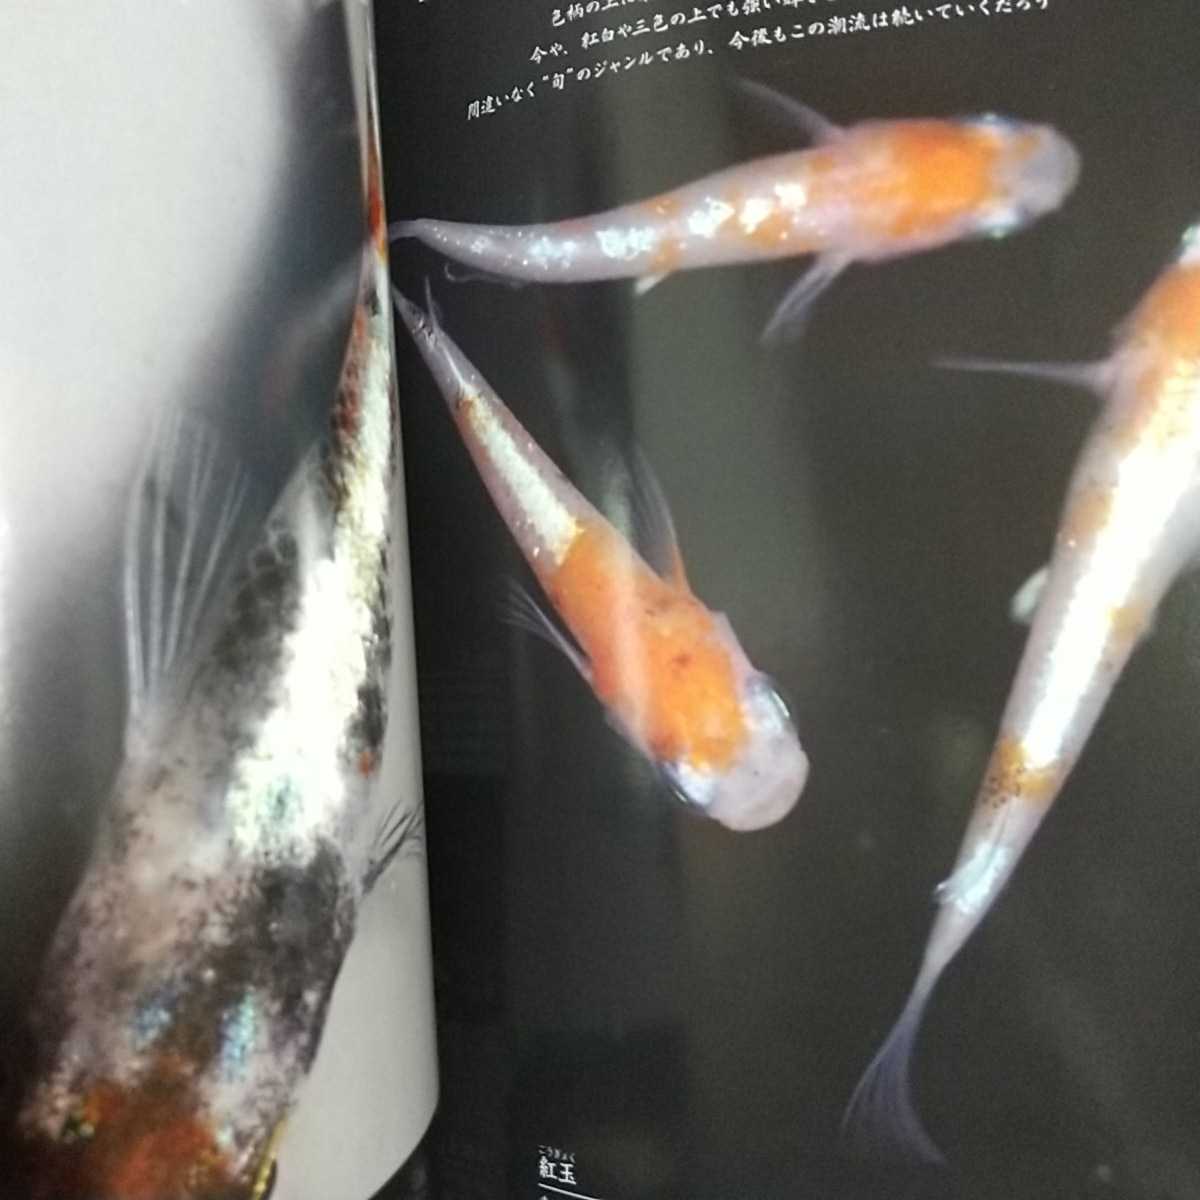  monthly aqua life 2019 year 11 month number next generation. me Dakar * appendix sticker none AQUA LIFE magazine fish breeding aquarium 0100015